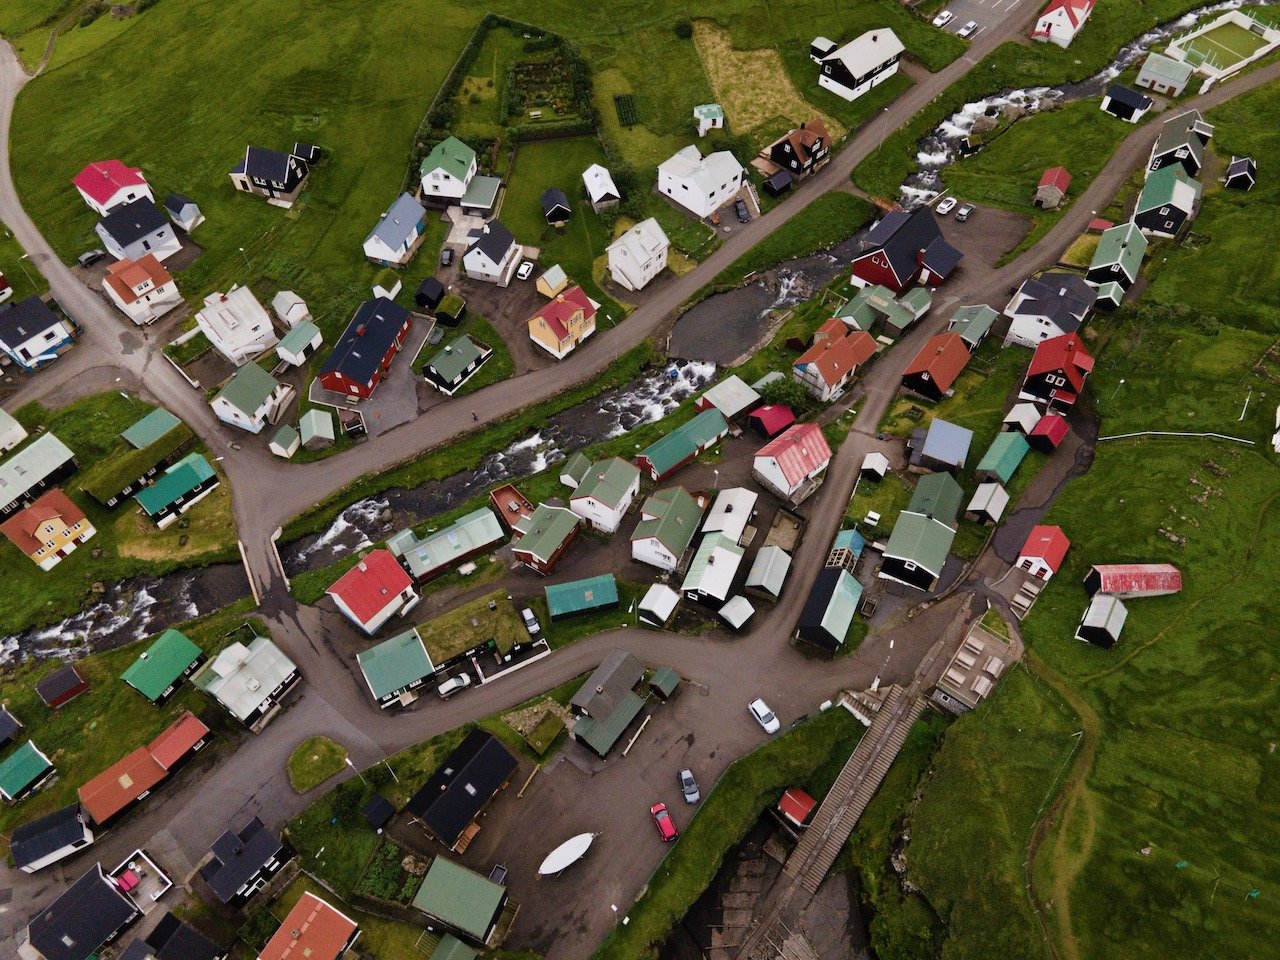   Gjógv, Eysturoy, Faroe Islands (ISO 400, 4.5 mm,  f /2.8, 1/20 s)  